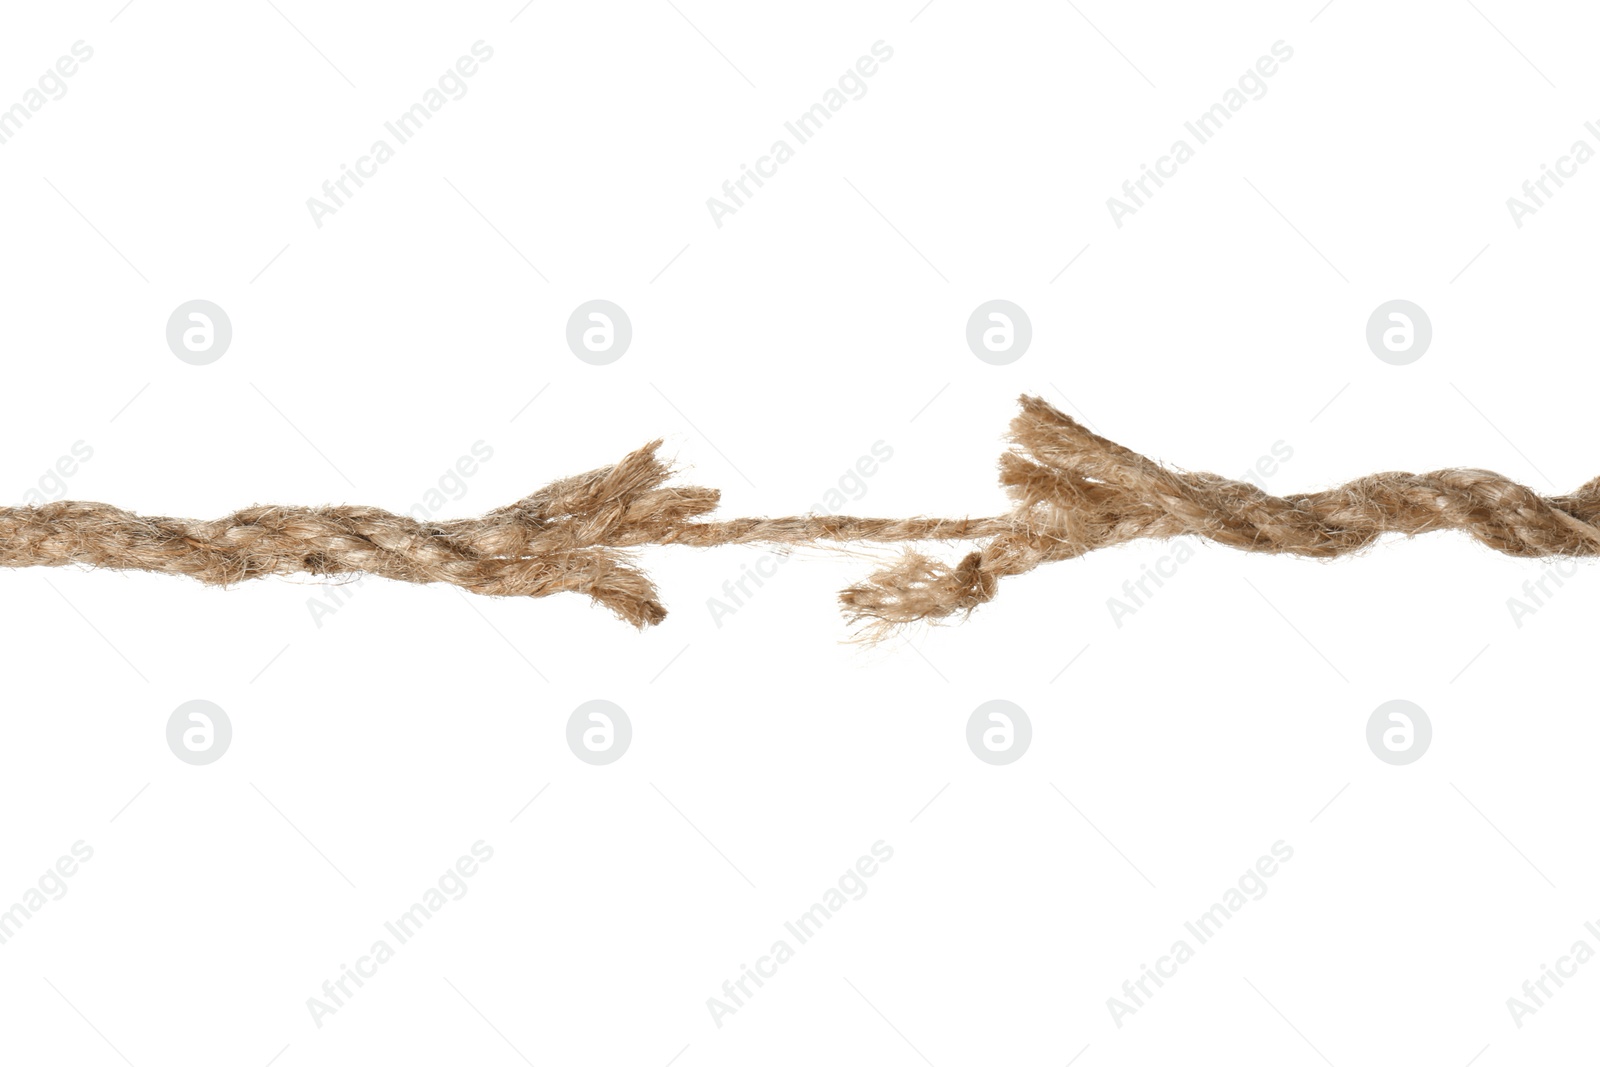 Photo of Rupture of hemp rope on white background